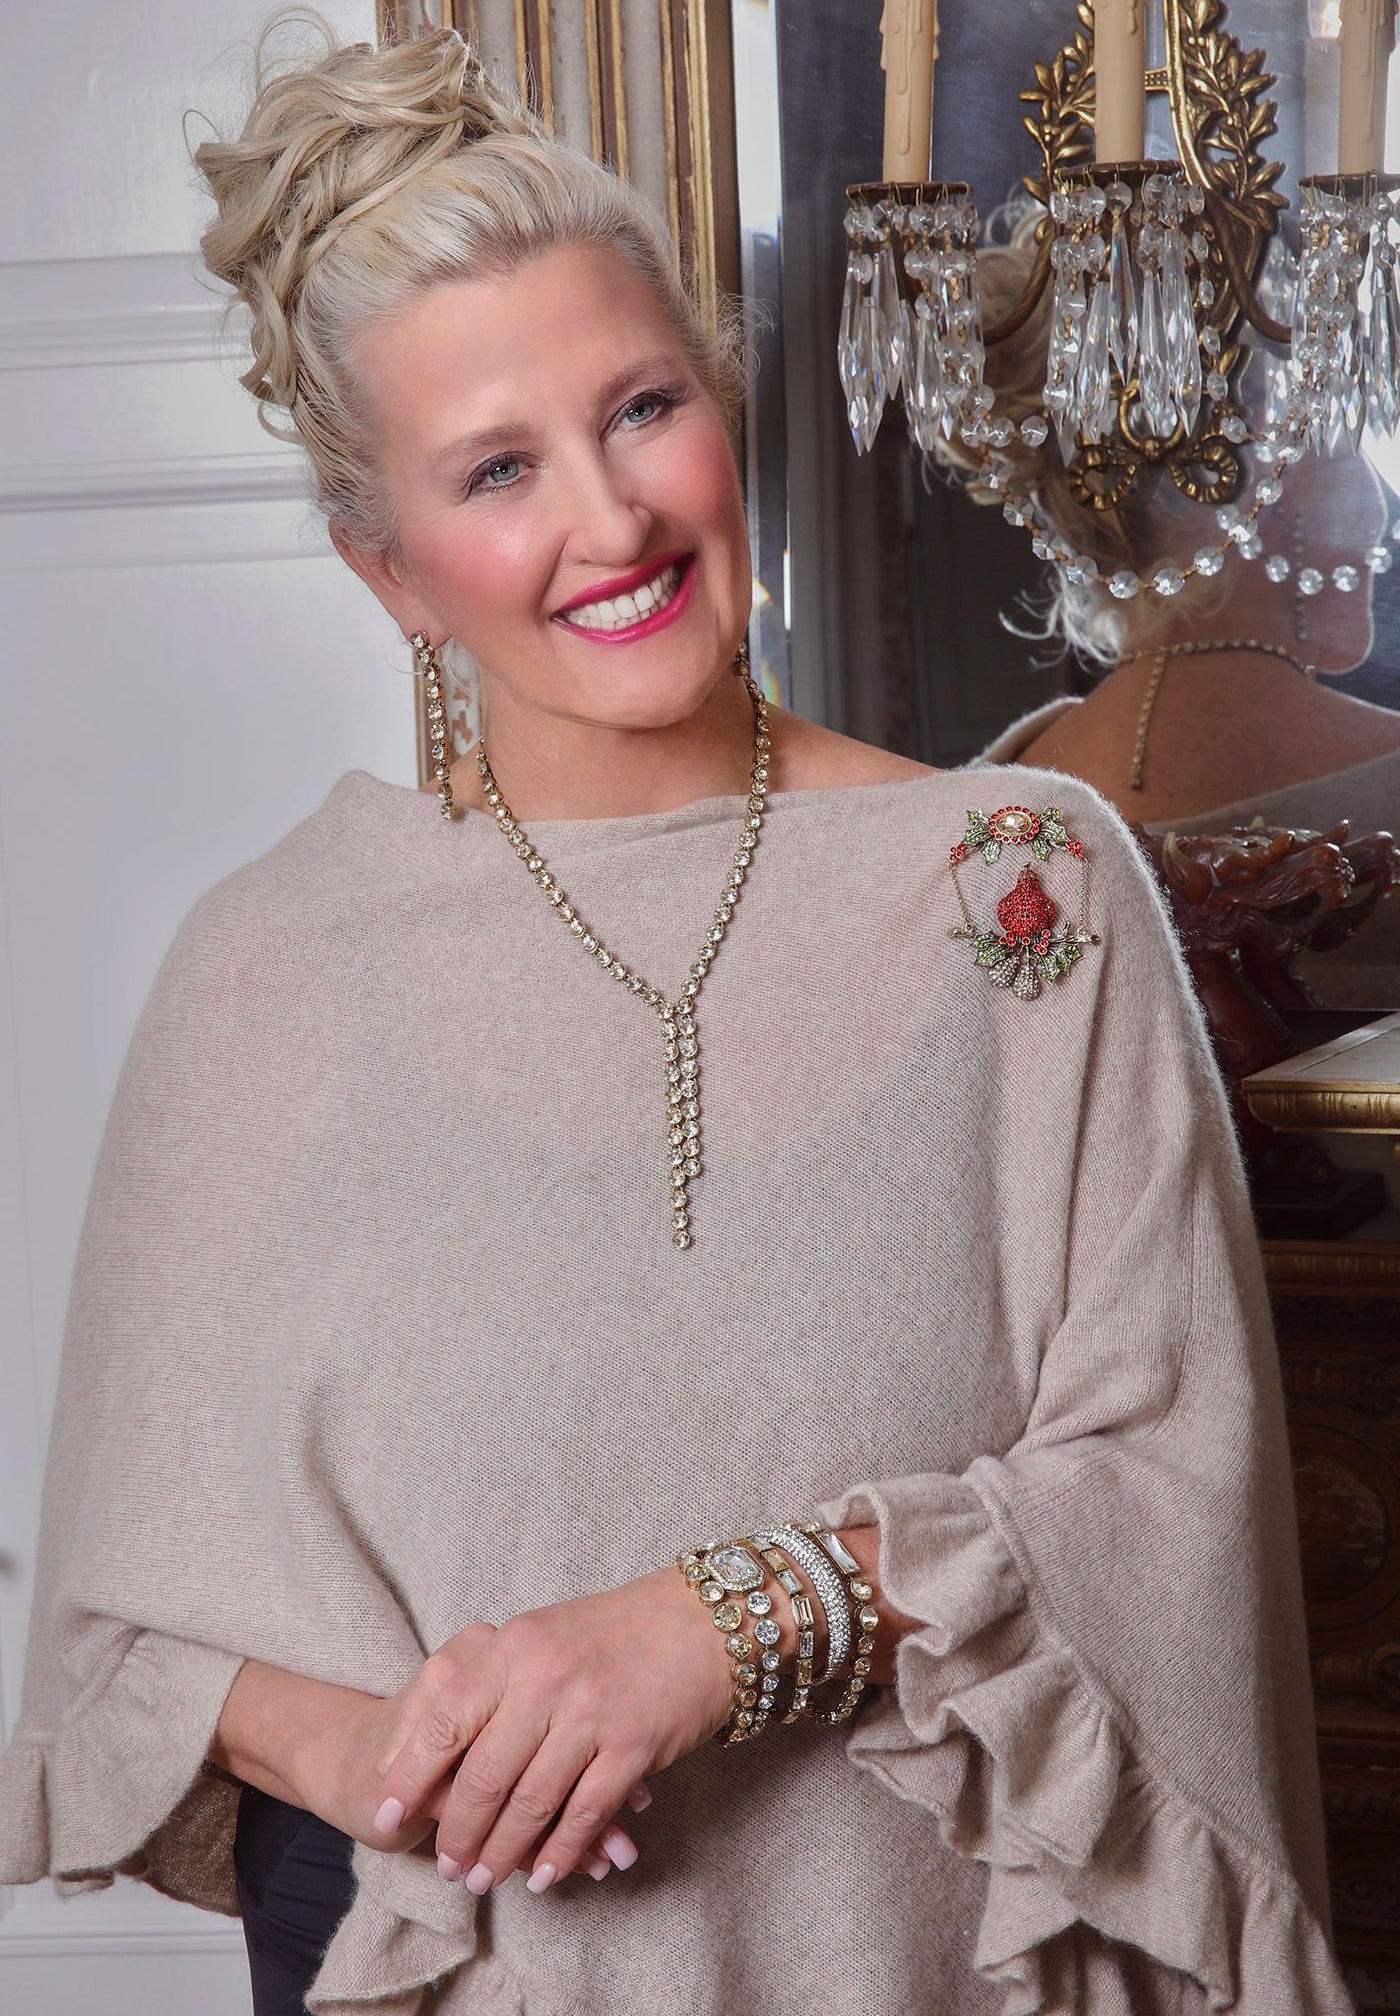 Heidi Daus®"On Line" Baguette Cut Crystal Layout Bracelet